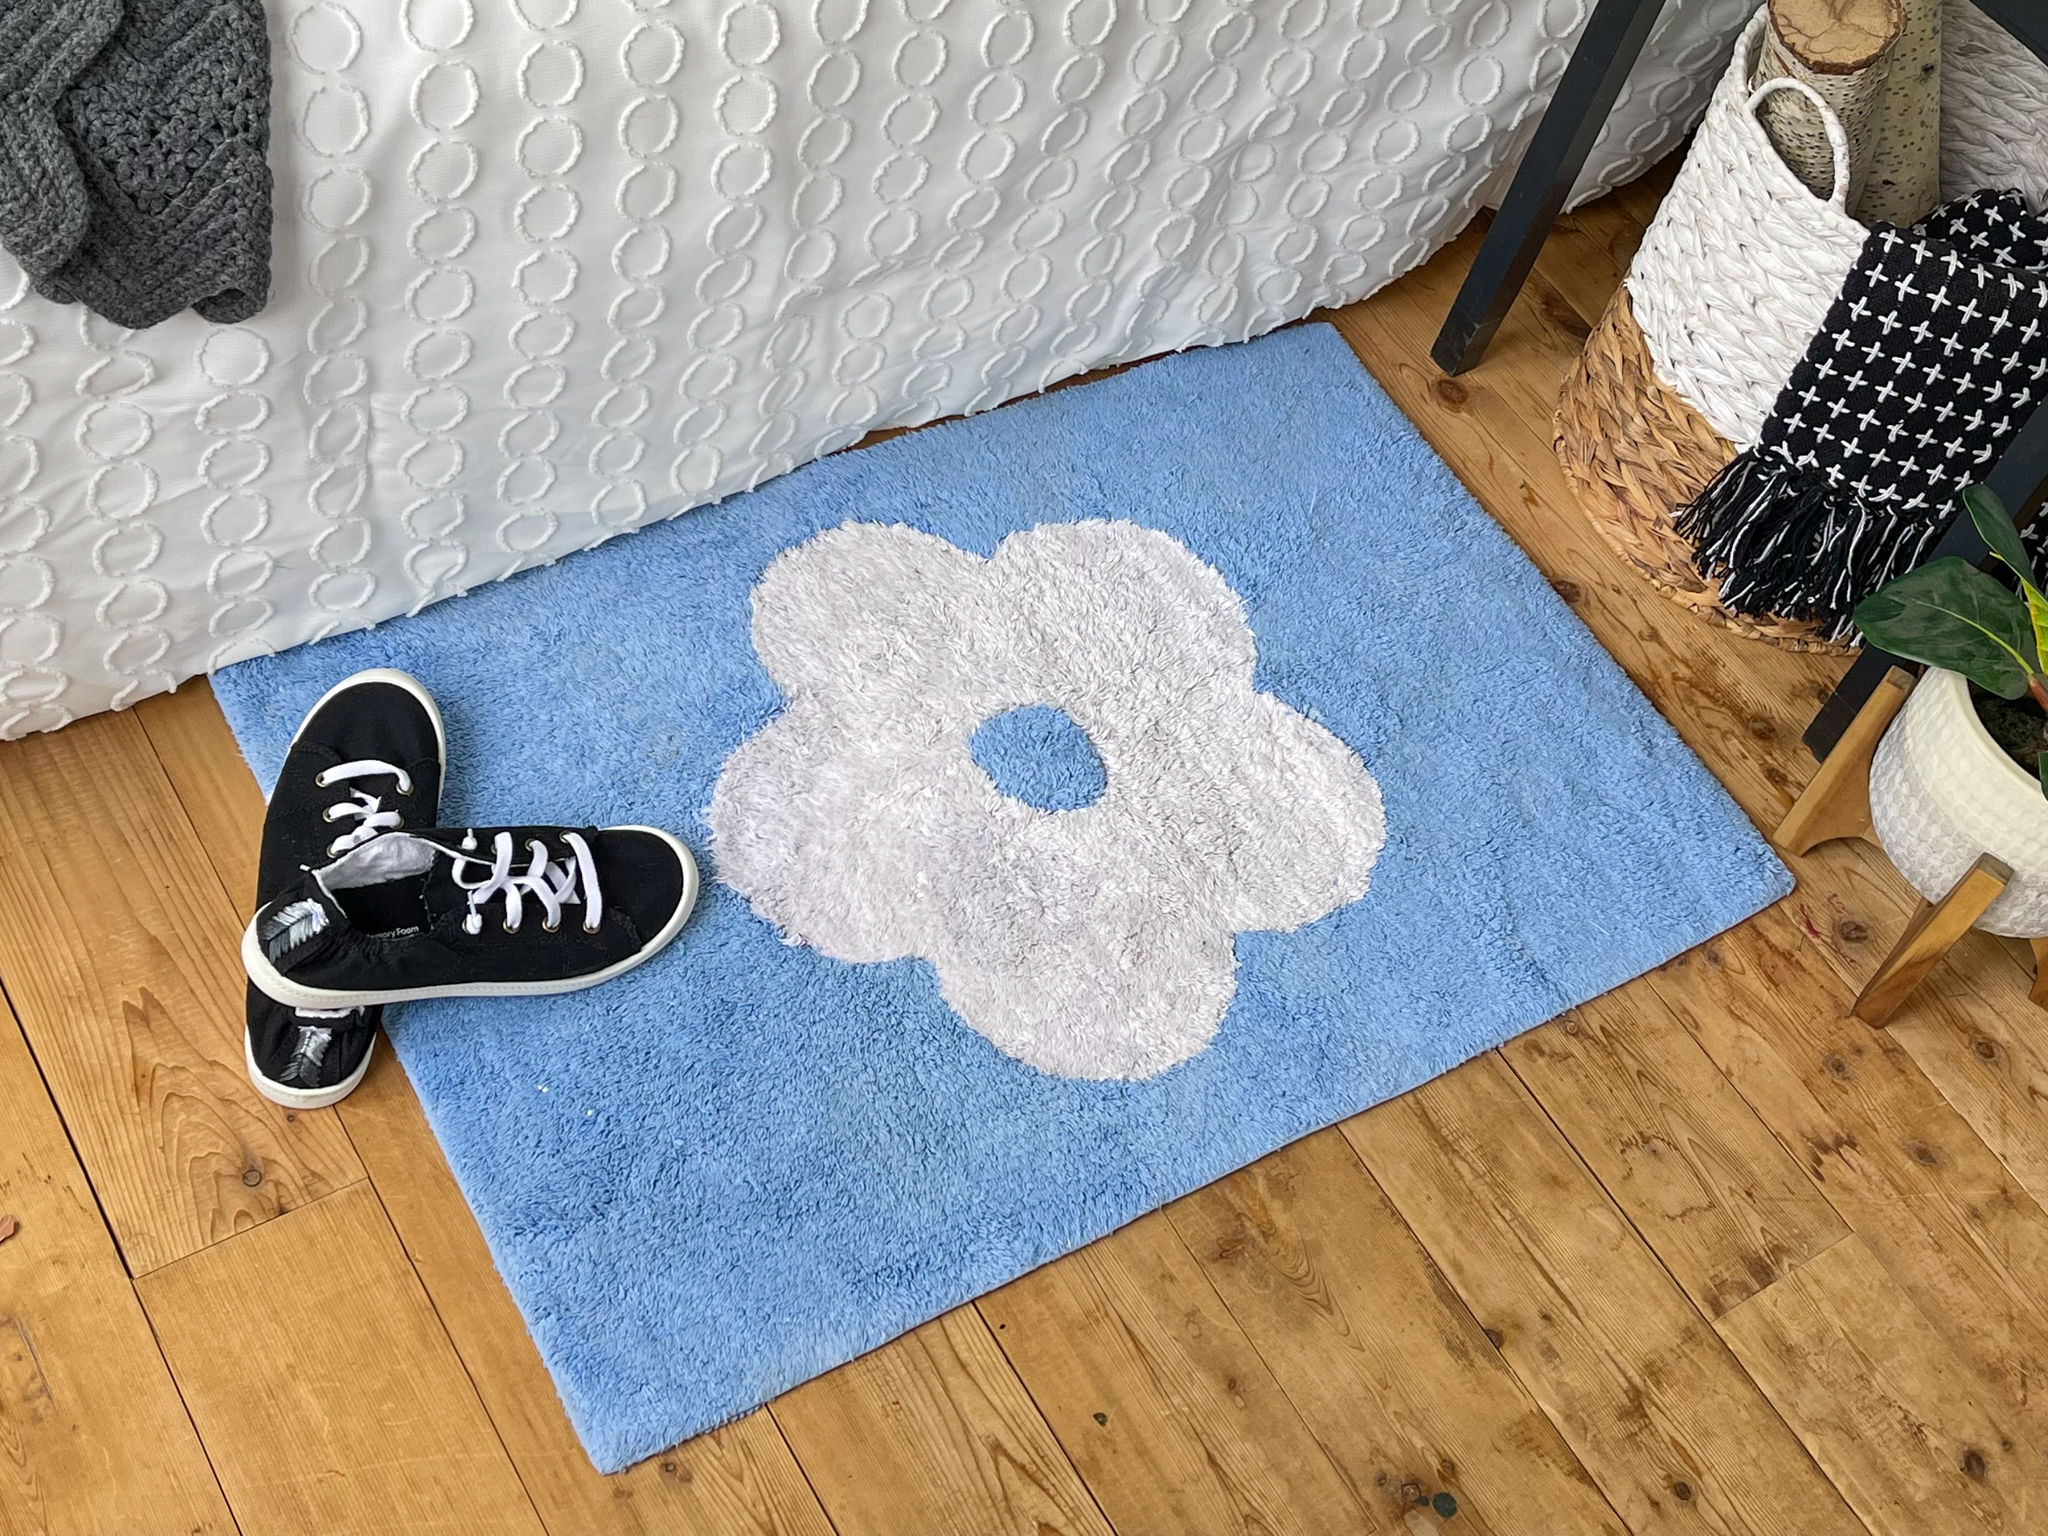 Carpet Samples and Gorilla tape area rug.